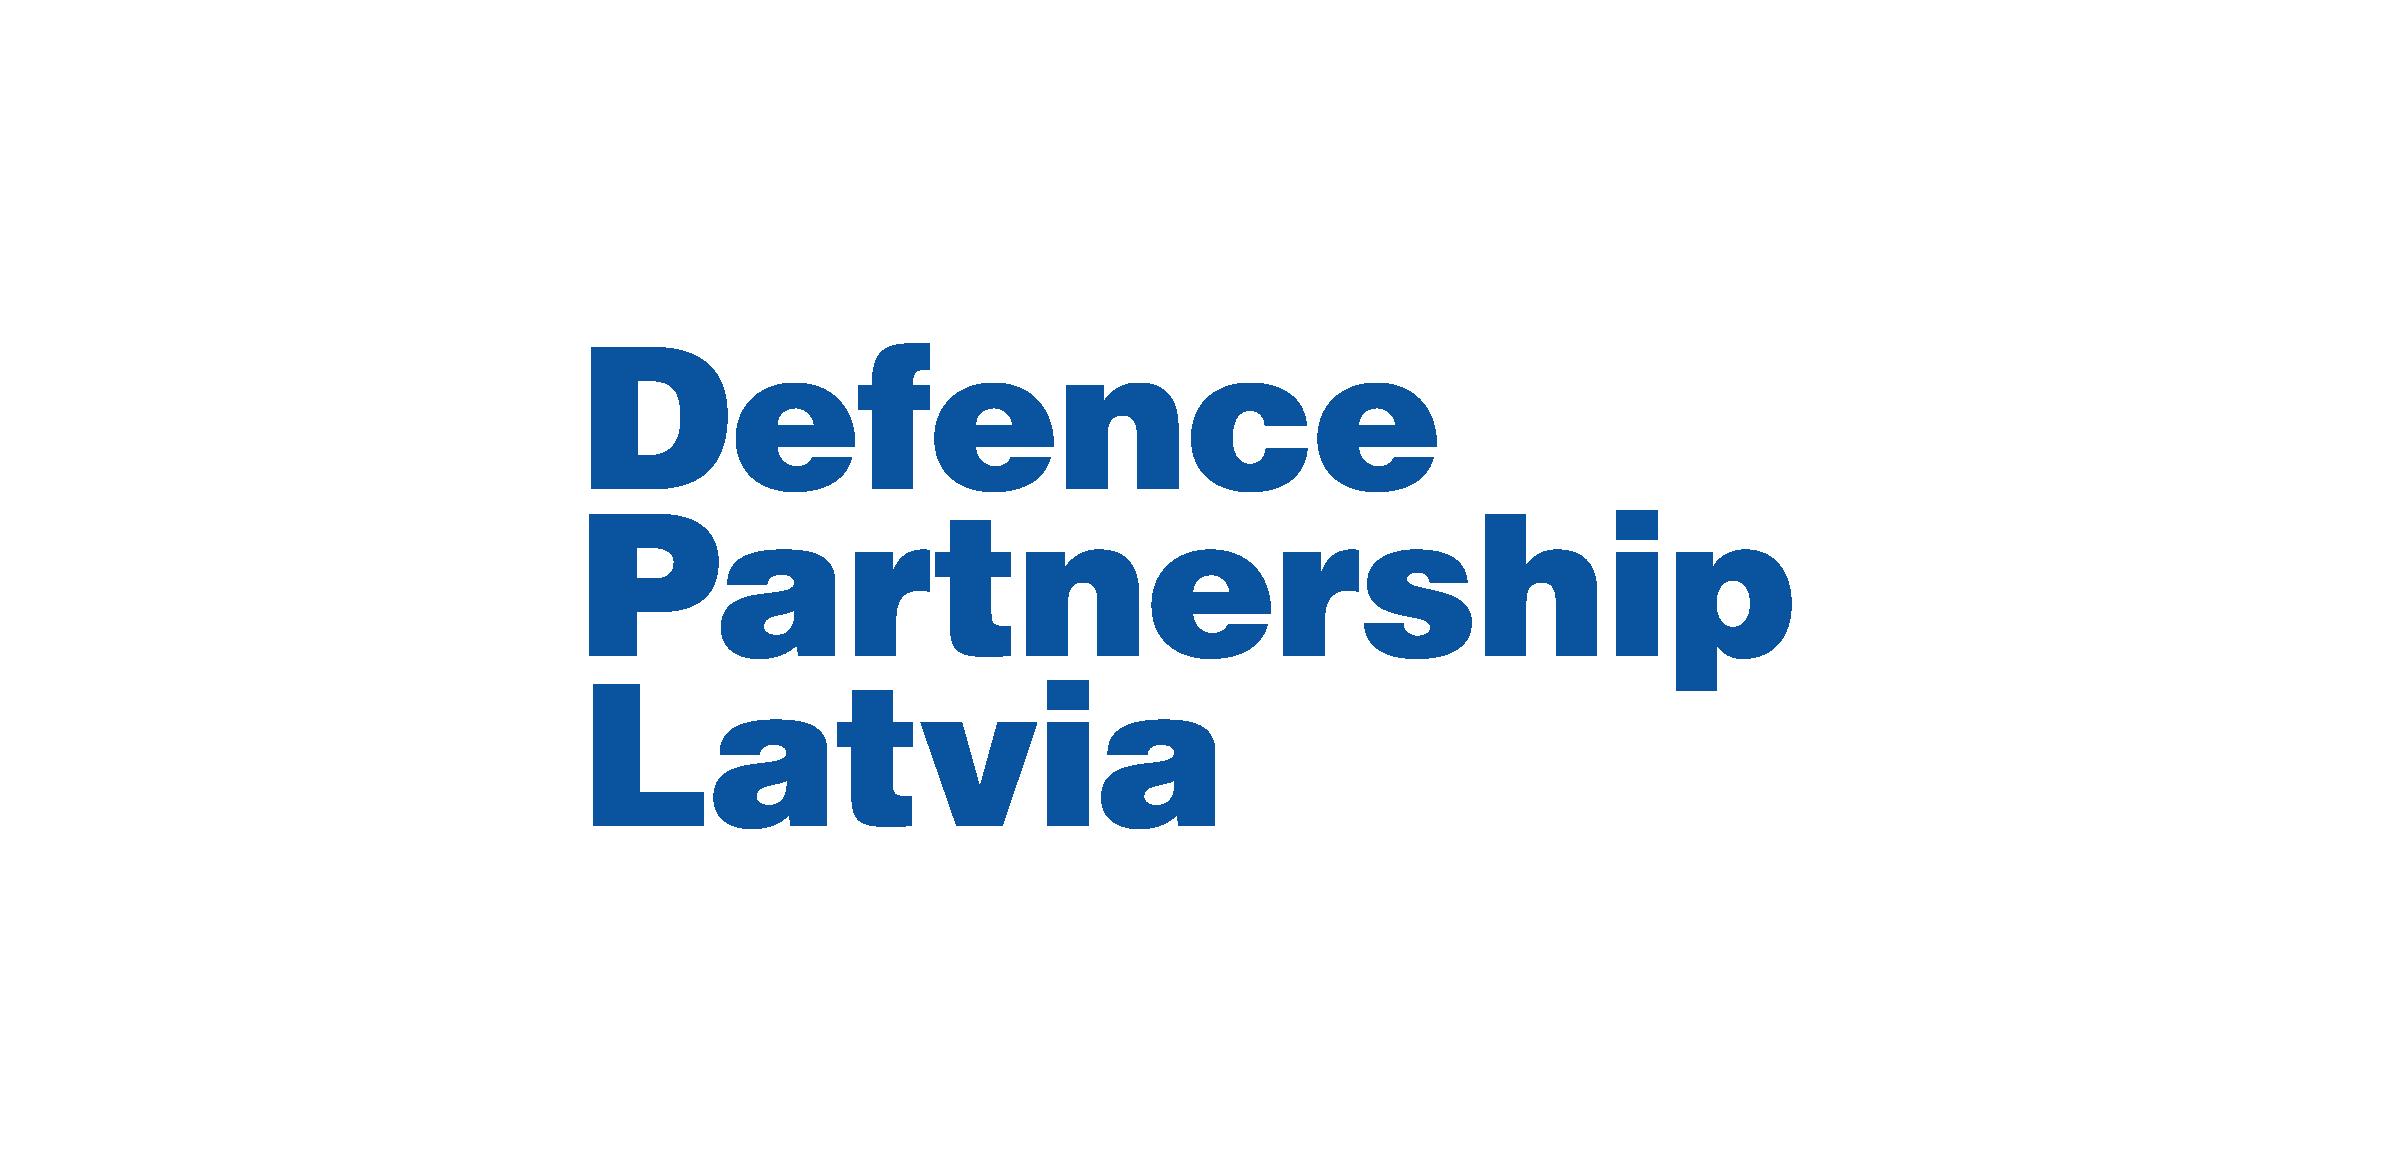 Defence Partnership Latvia